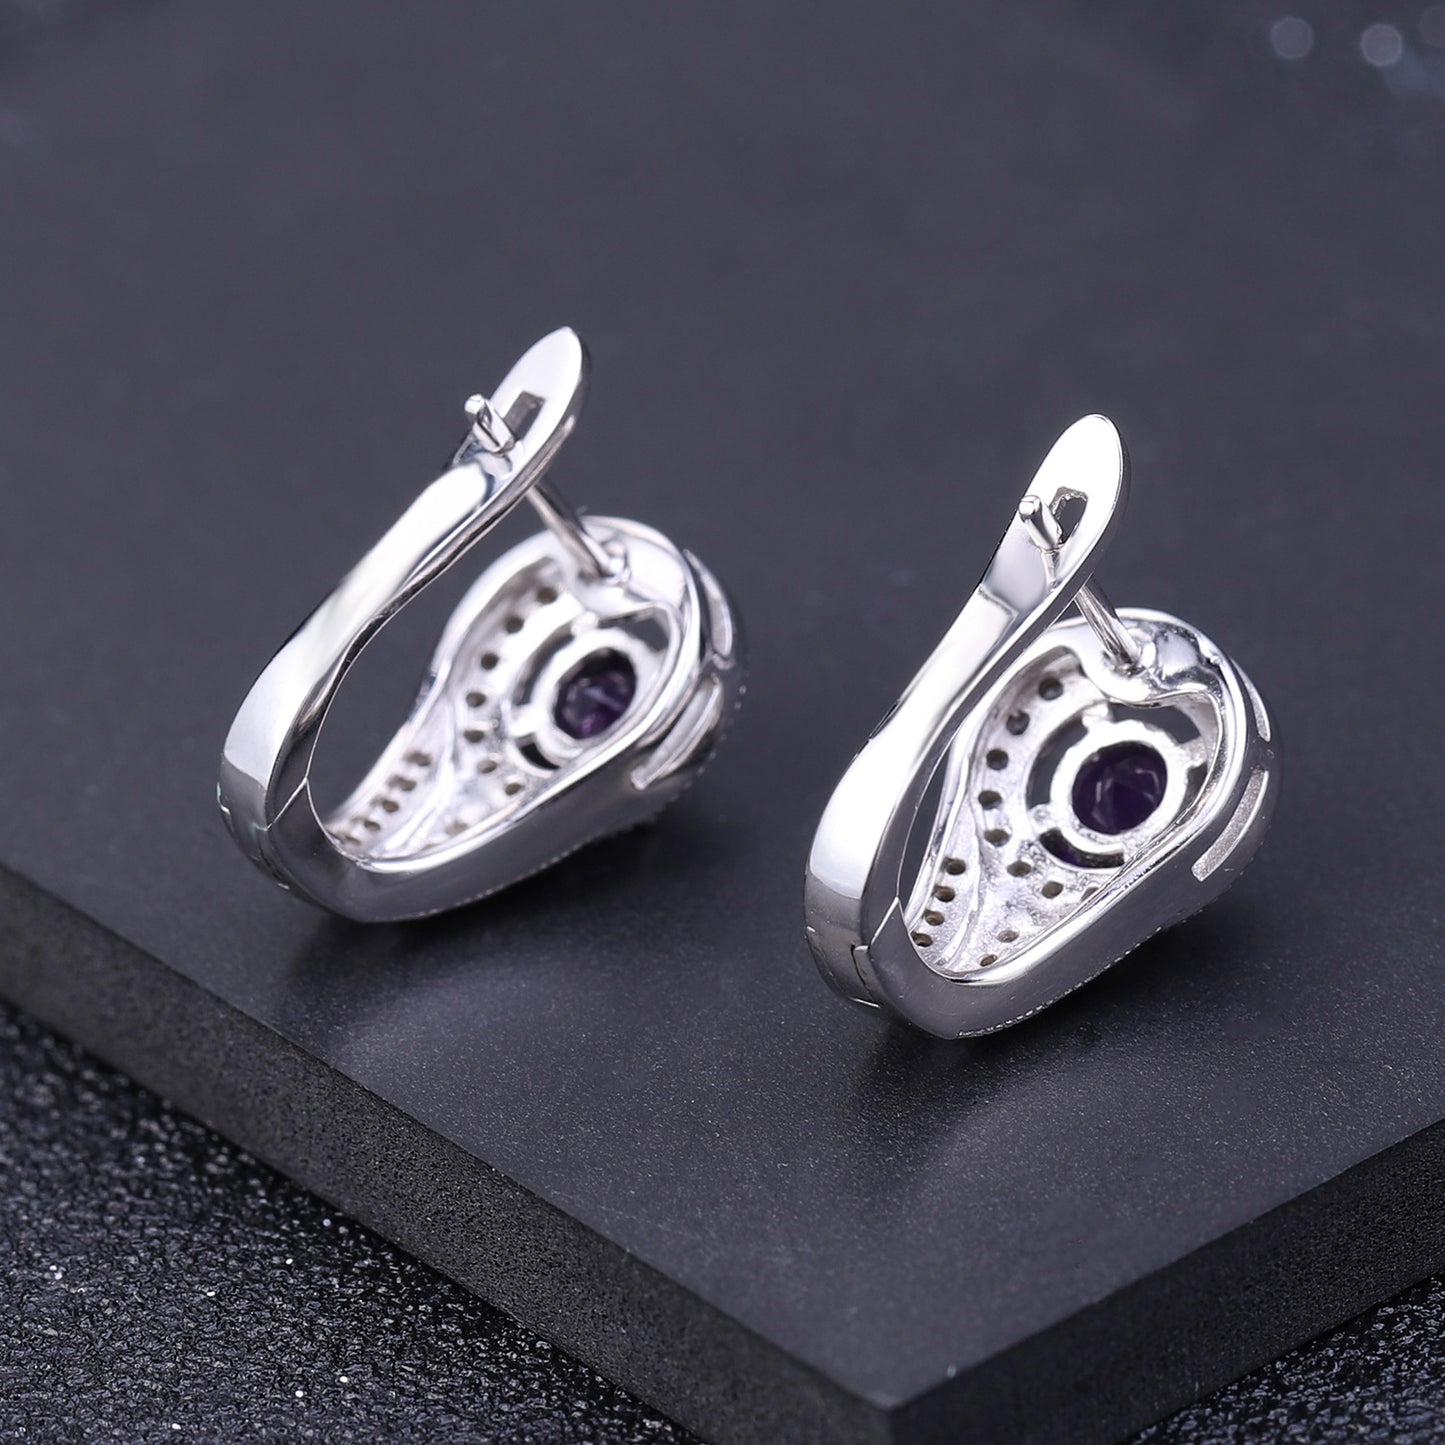 European Natural Amethyst Luxury Soleste Halo Round Cut Silver Studs Earrings for Women